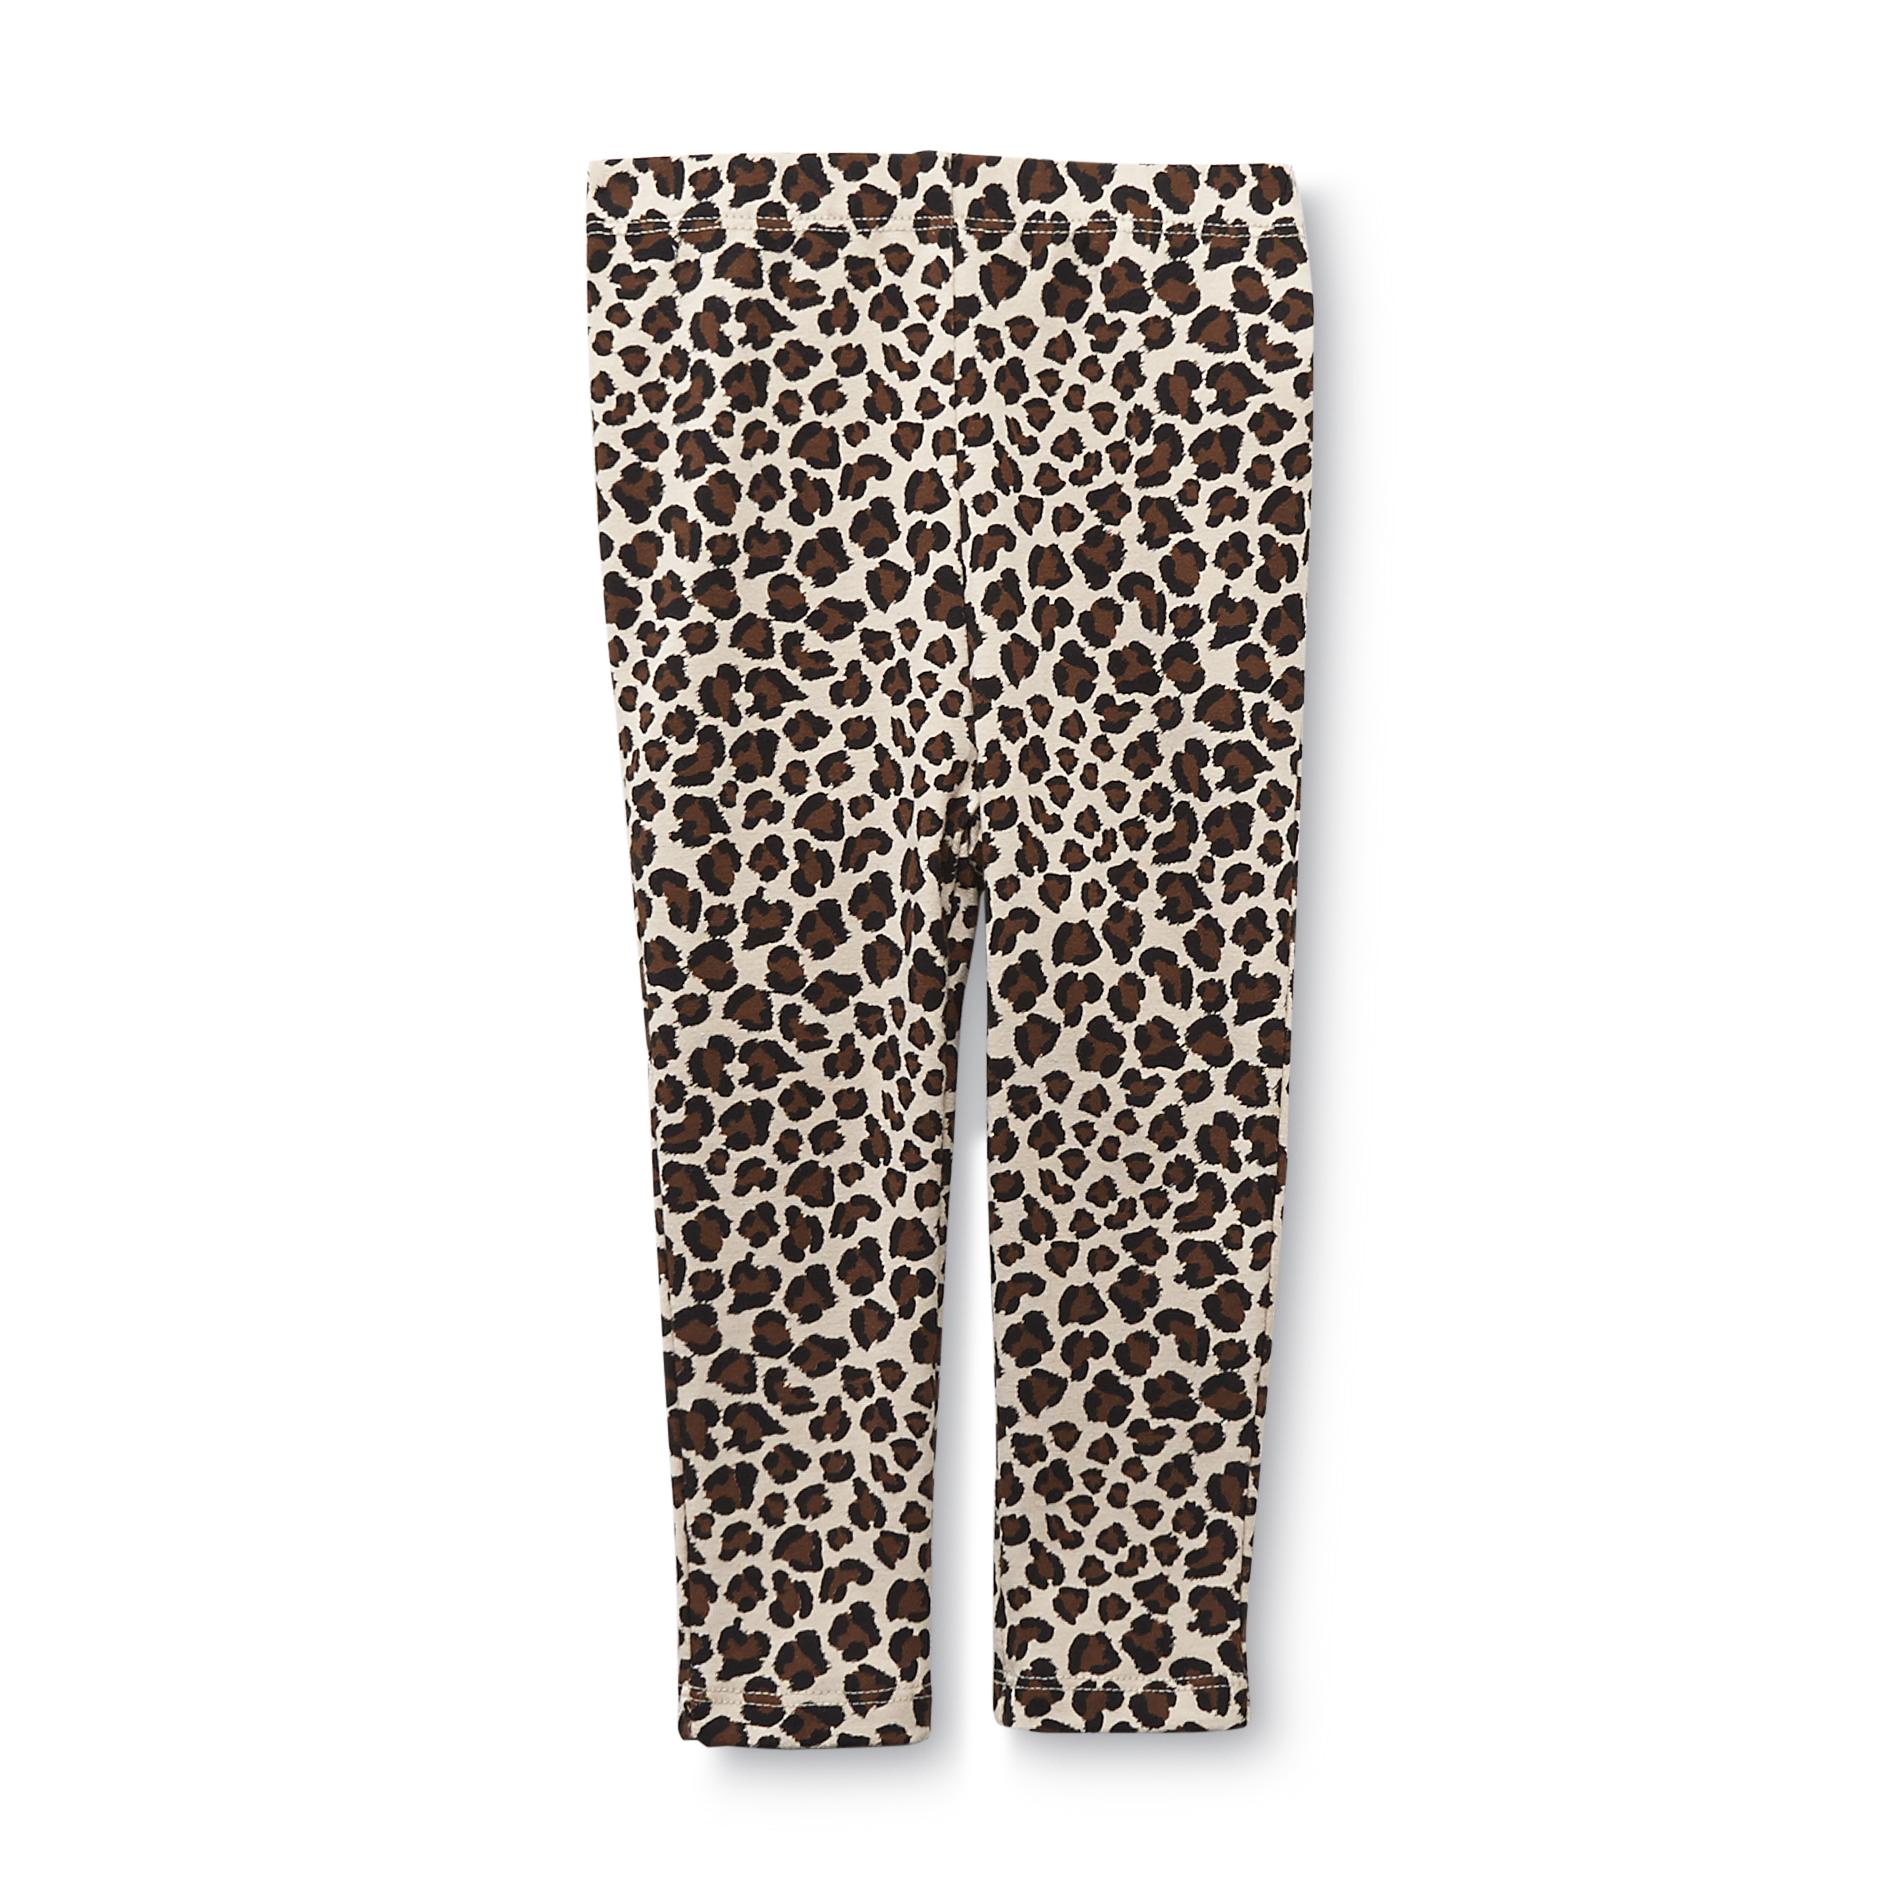 Toughskins Girl's Printed Leggings - Leopard